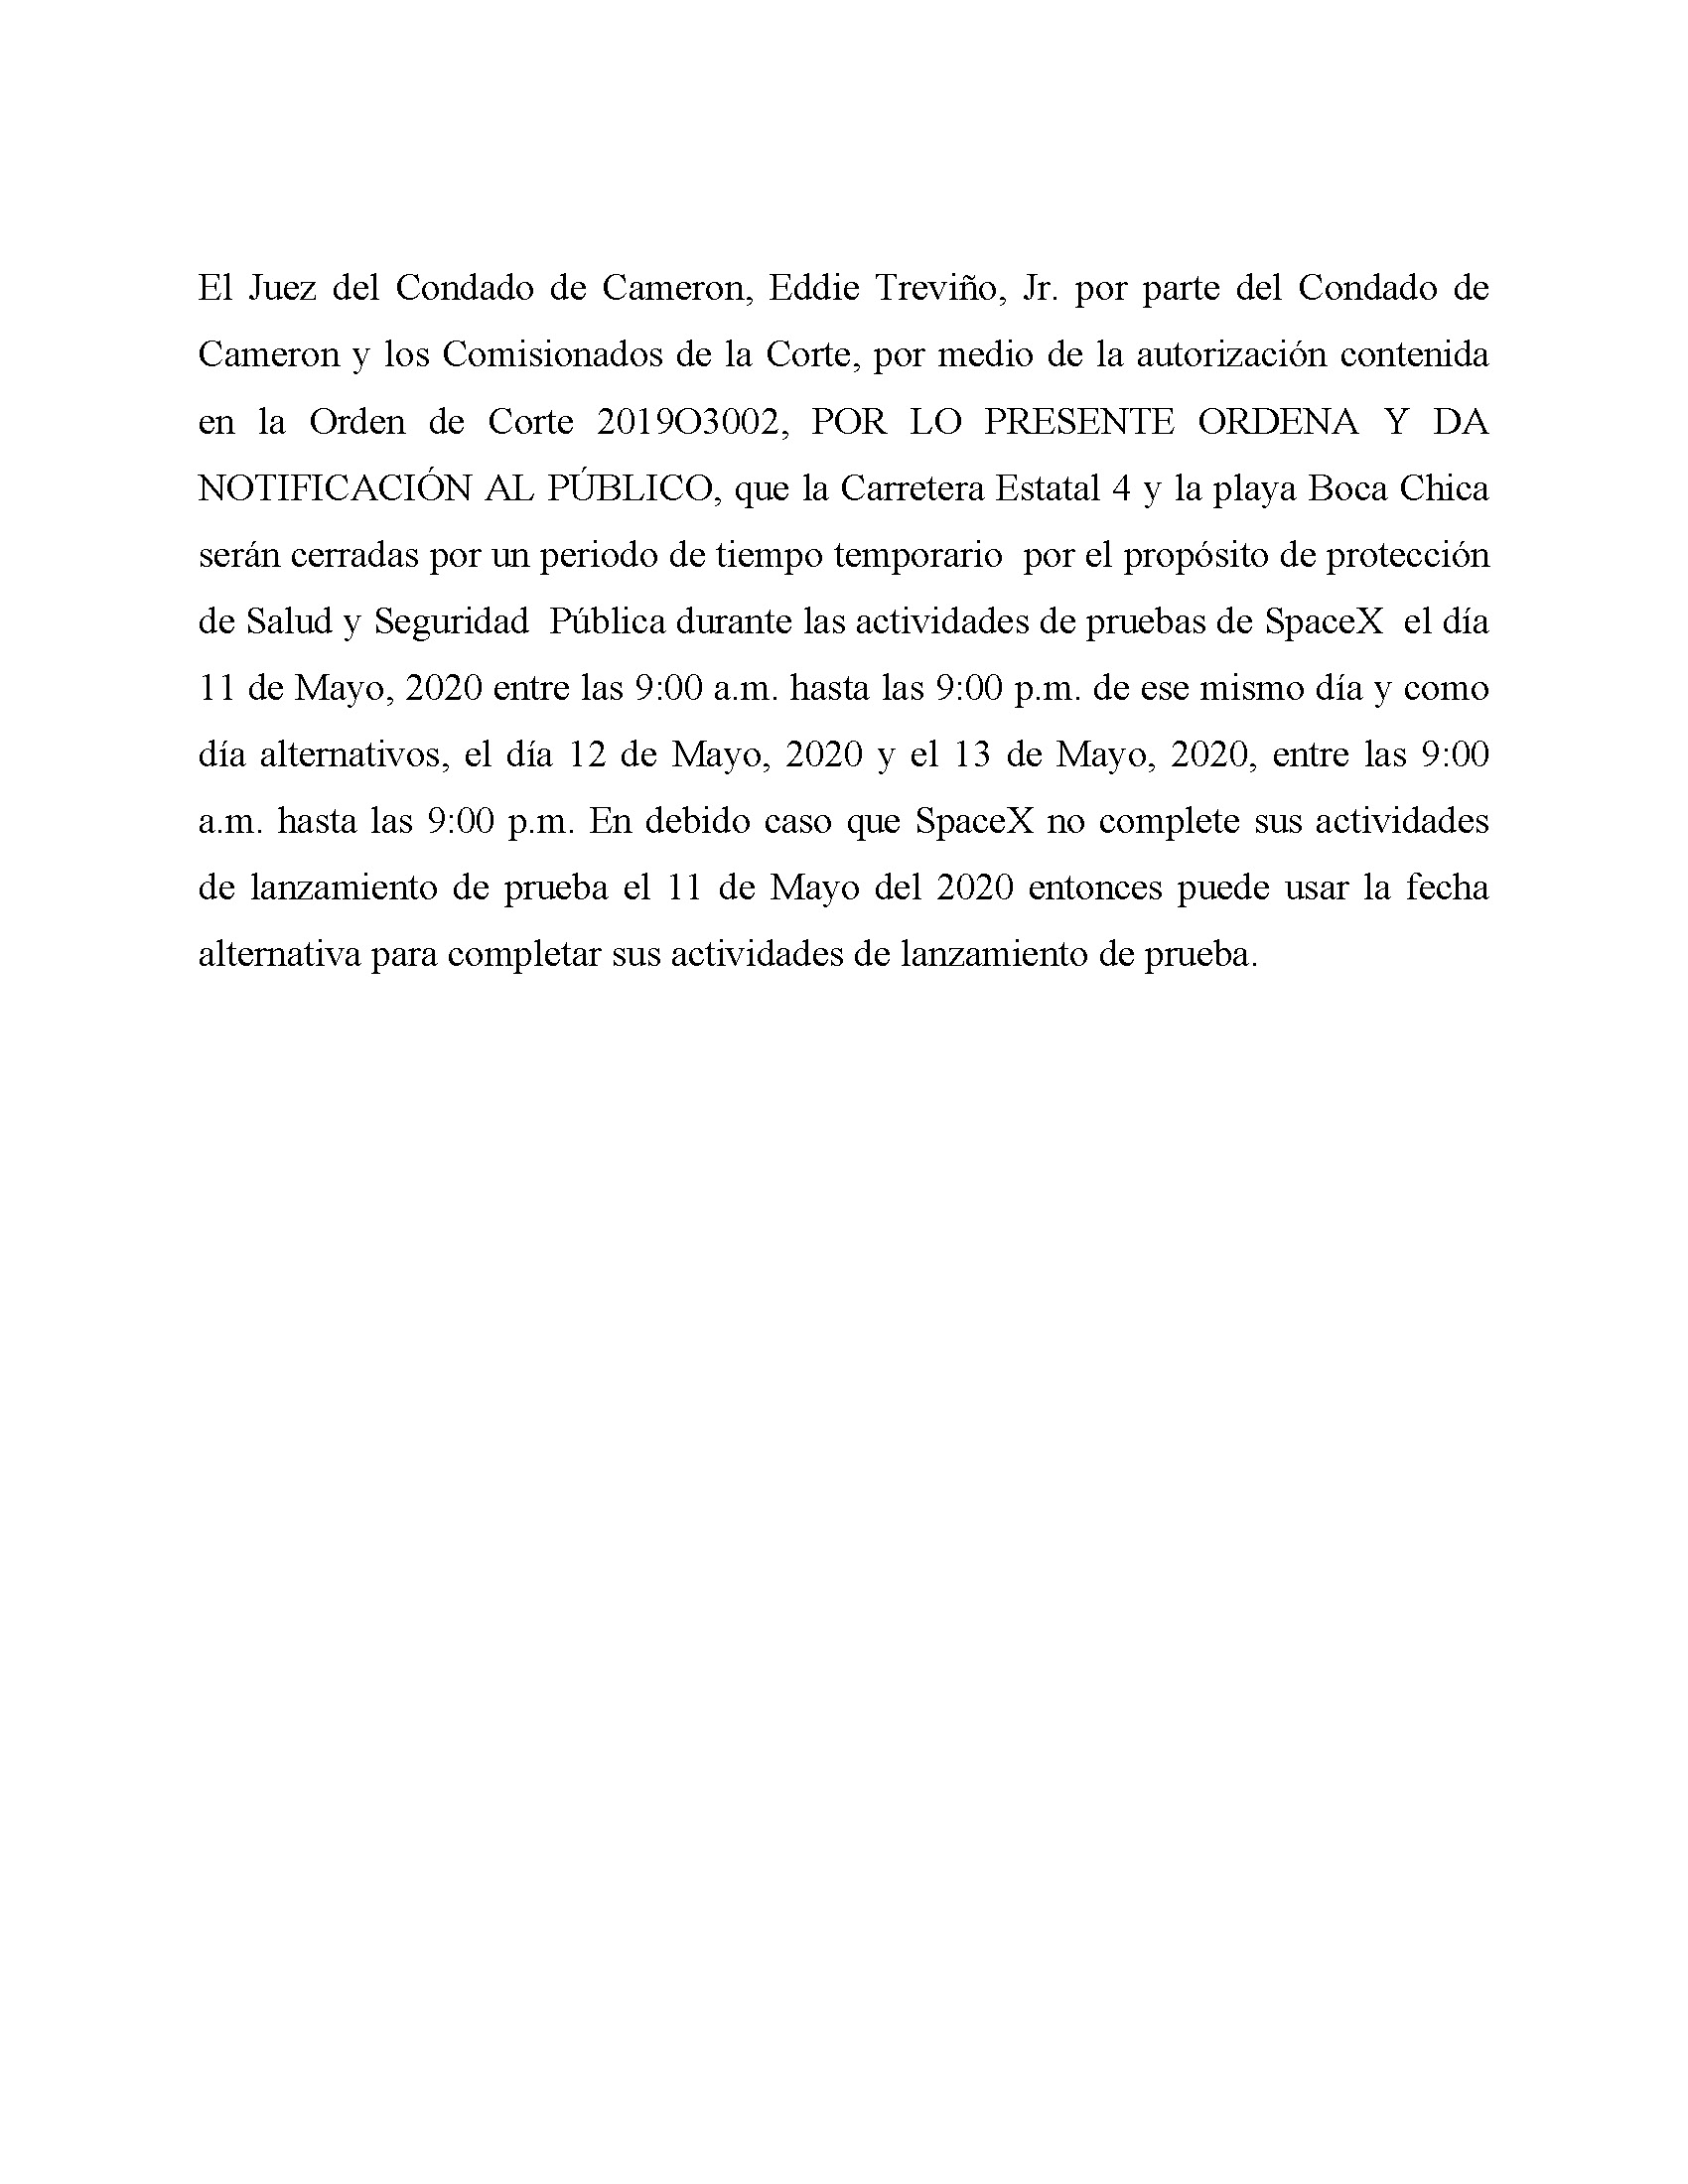 ORDER.CLOSURE OF HIGHWAY 4 Y LA PLAYA BOCA CHICA.SPANISH.05.11.20